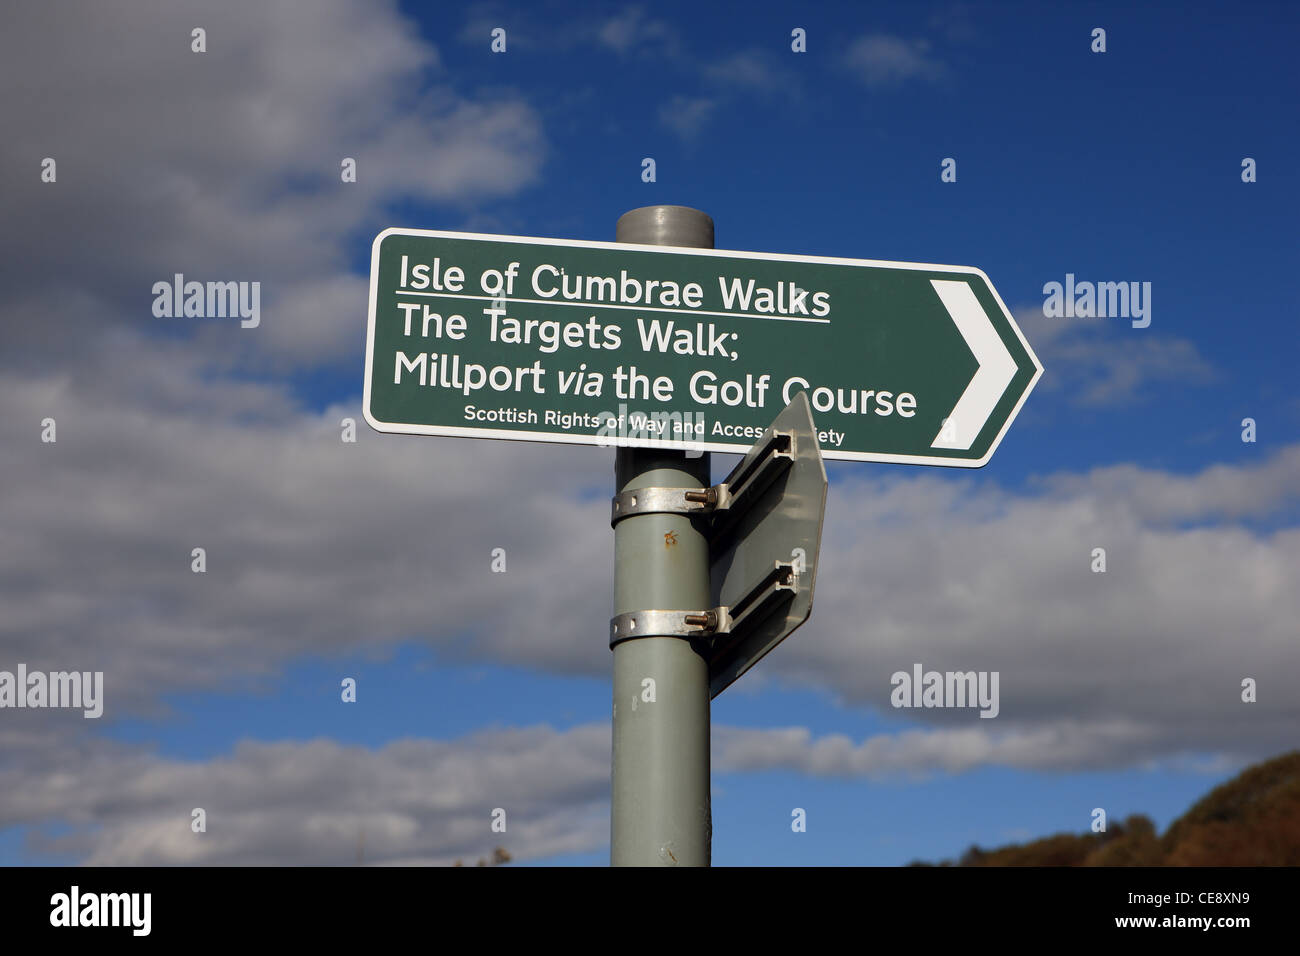 Isle of Cumbrae walks sign Stock Photo